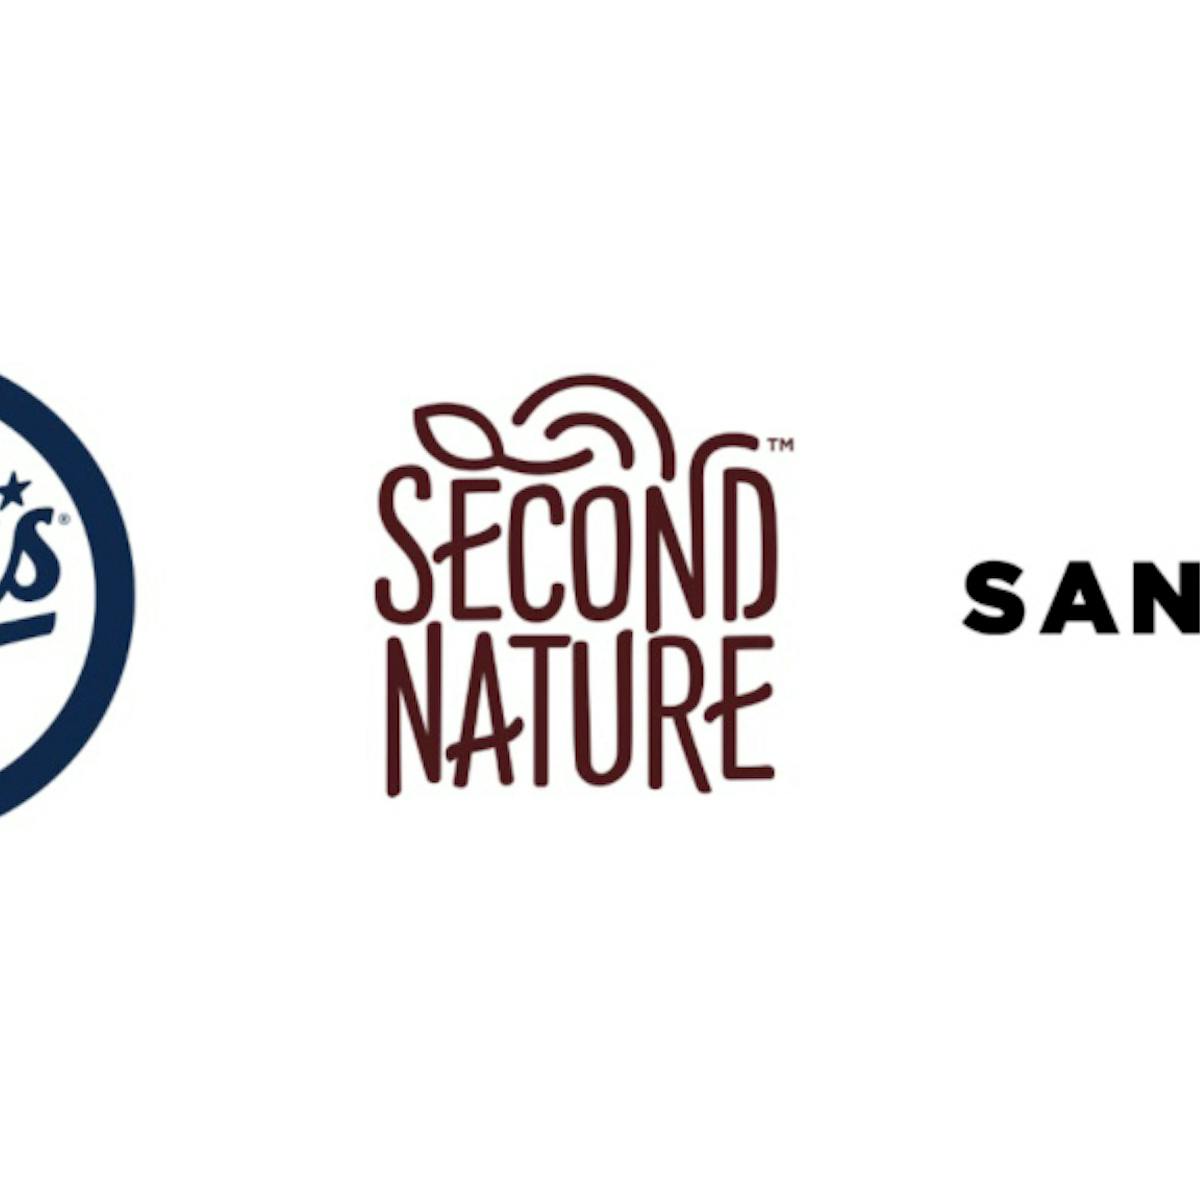 Second Nature Brands 3familylogos